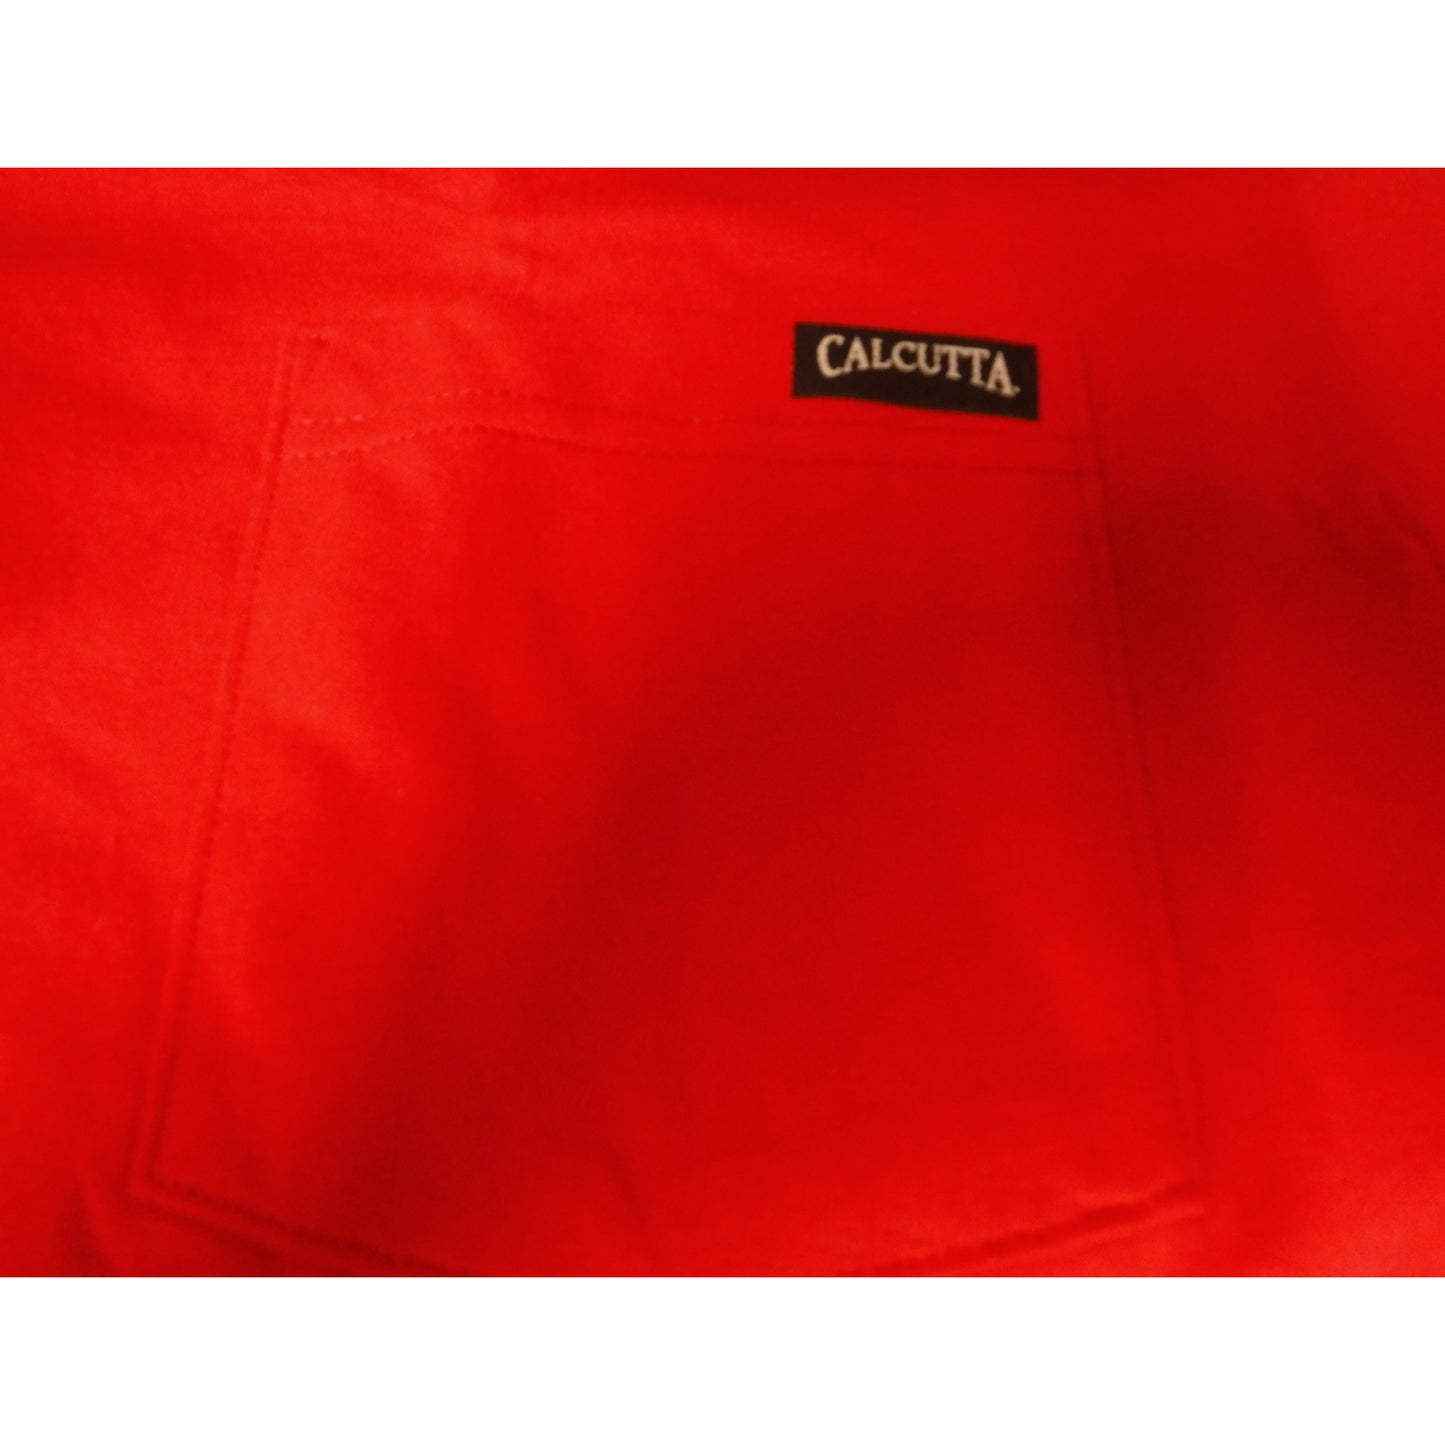 New Authentic Calcutta Short Sleeve Red Shirt/  Original Logo with P.I.T.B-Medium